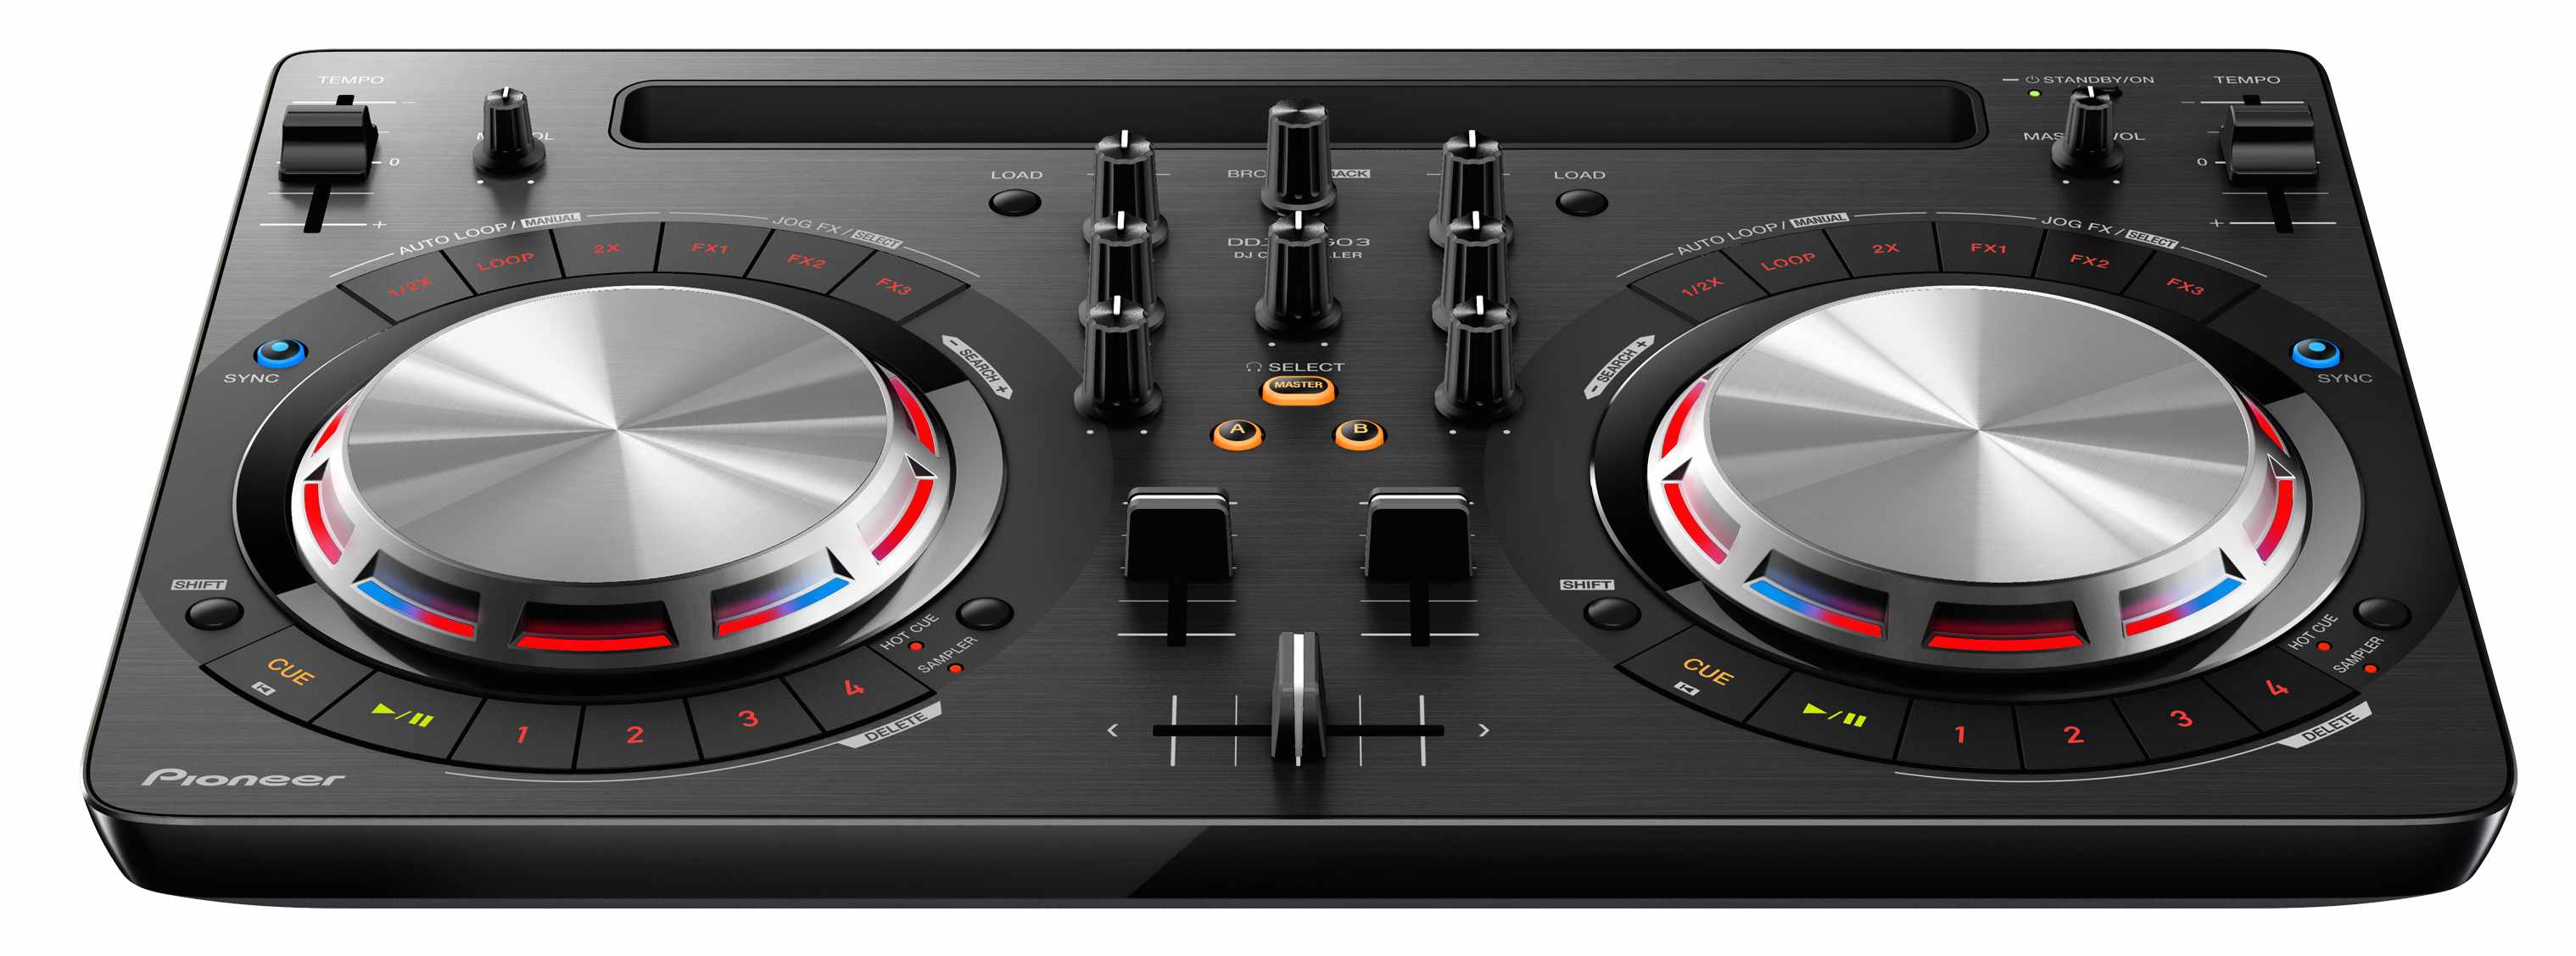 Pioneer DDJ WeGo3 Black DJ Controller for iPad